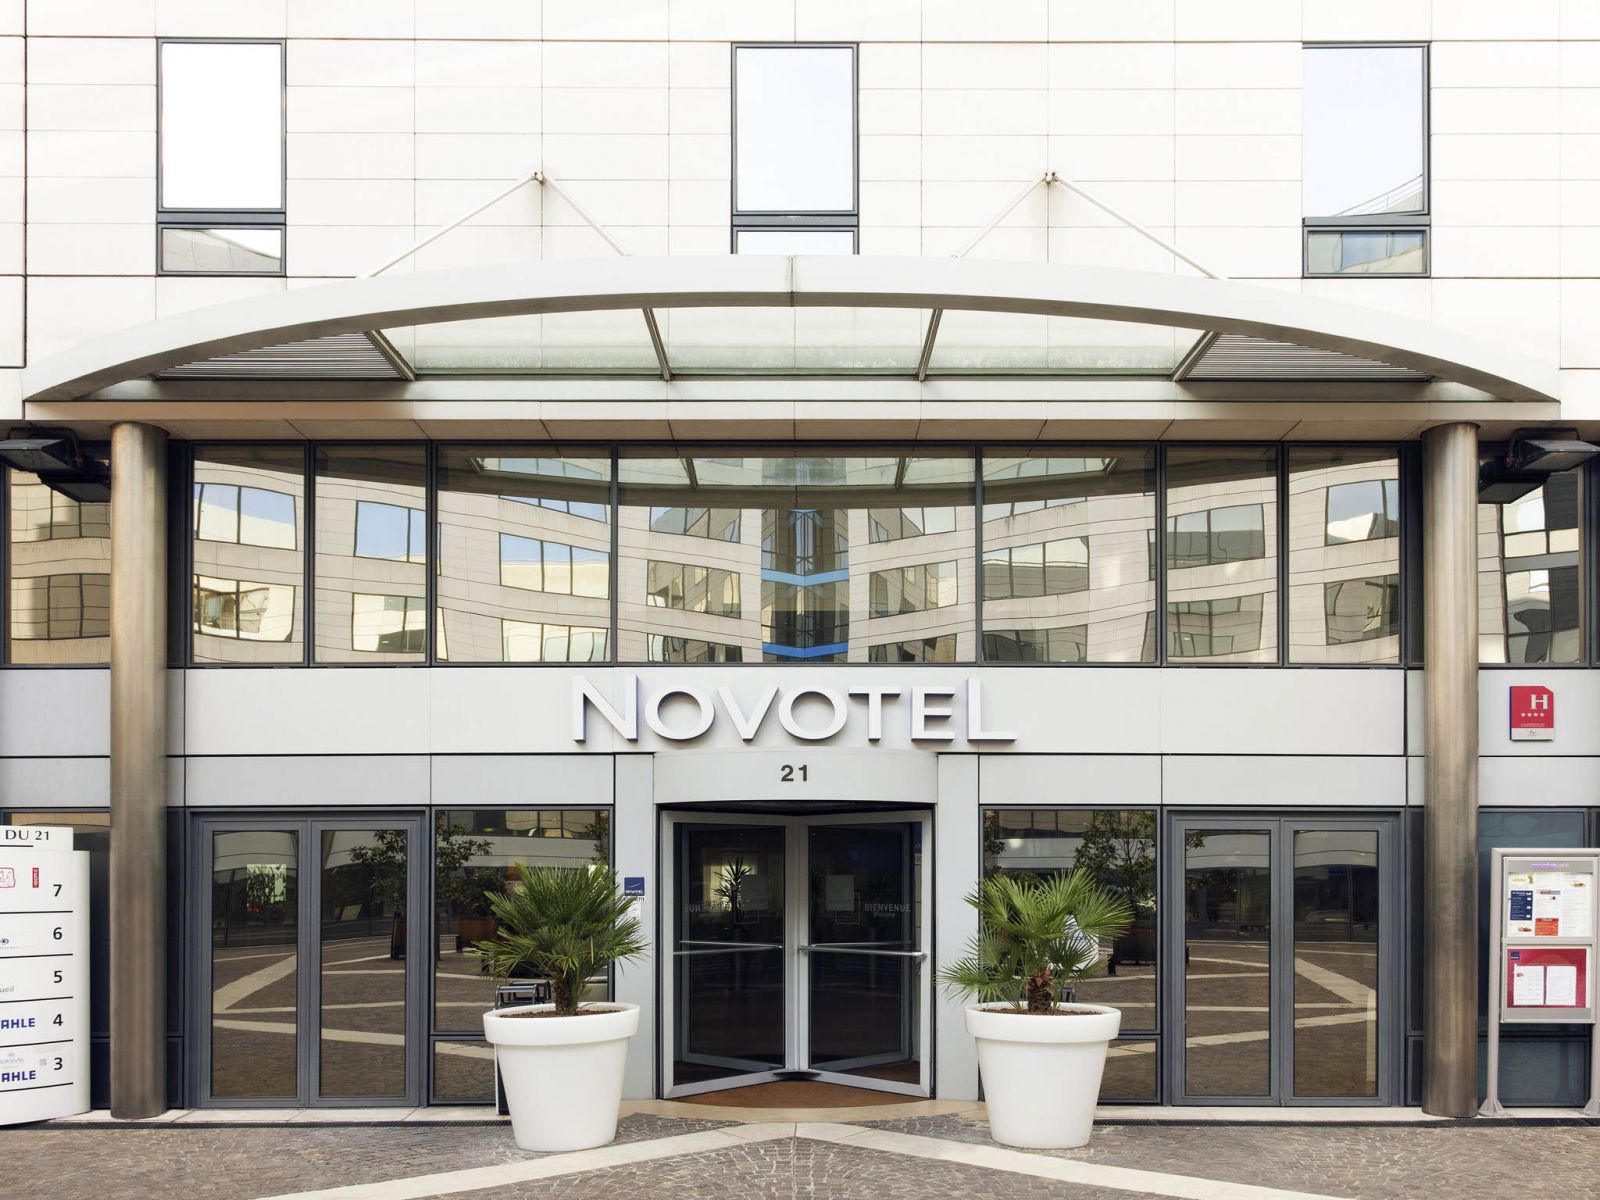 Novotel Reuil-Malmaison hotel - Entrance